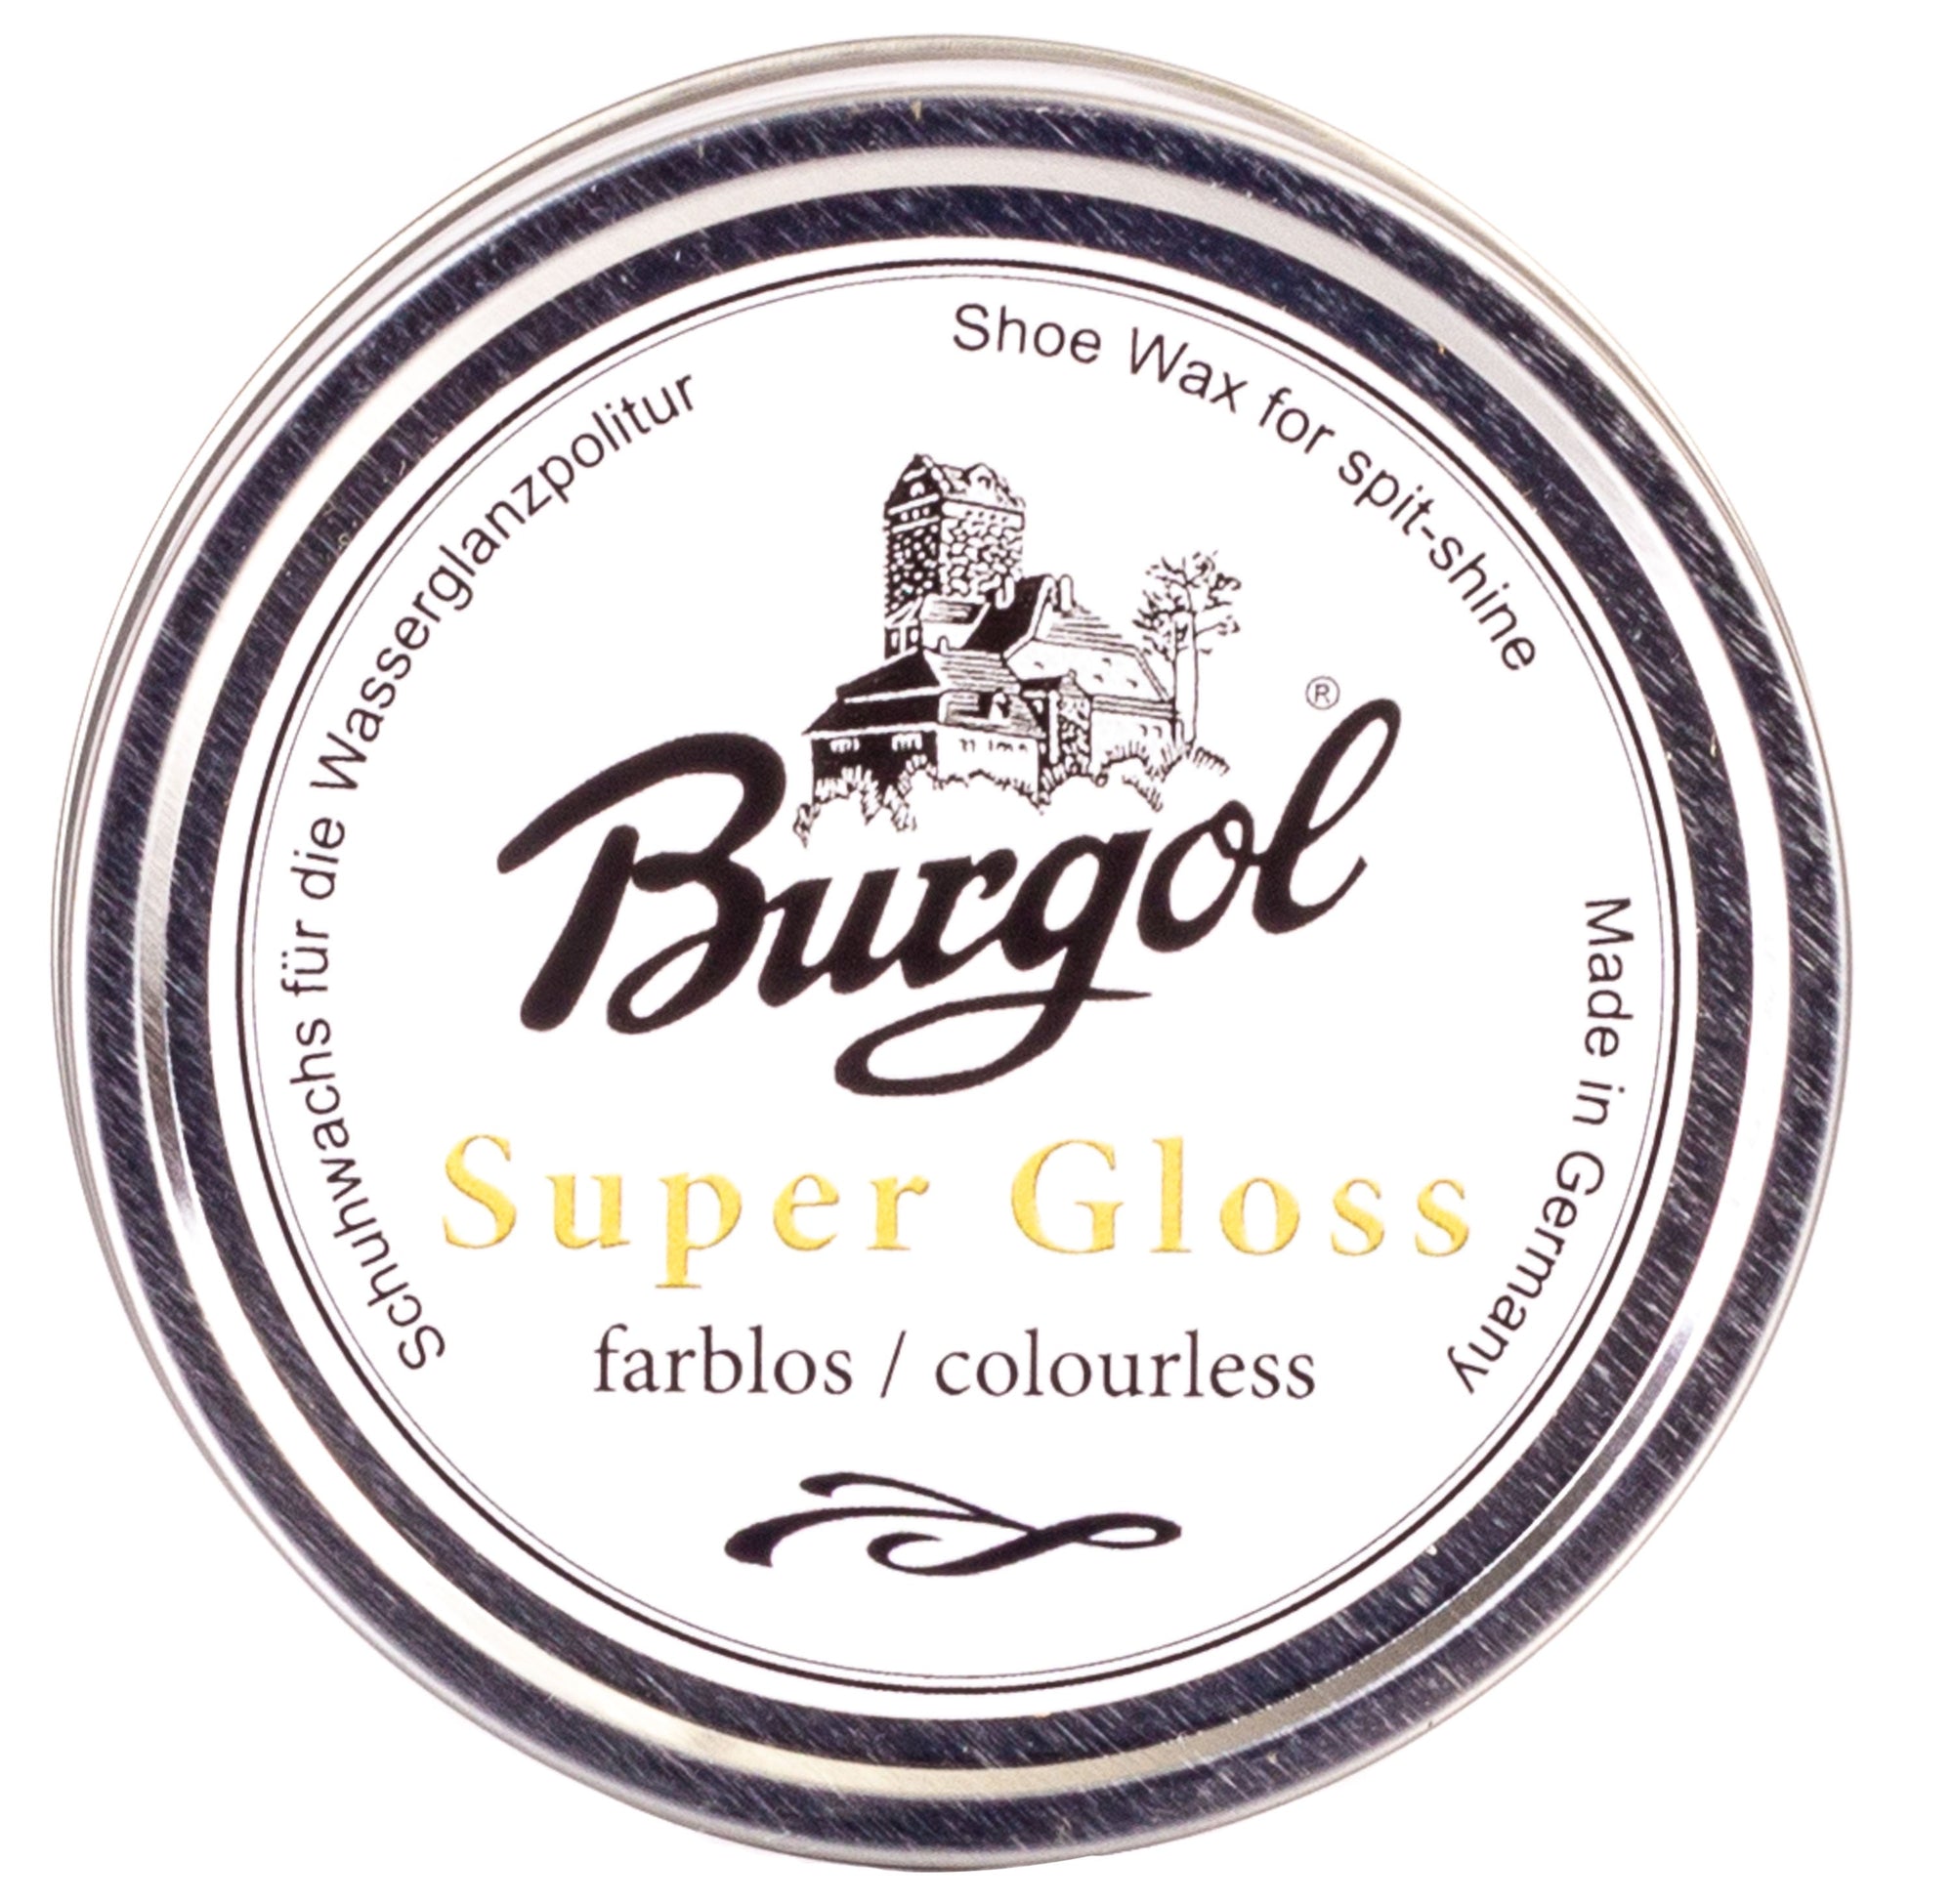 Super Gloss in der Metalldose 75ml-Burgol-Conrad Hasselbach Shoes & Garment